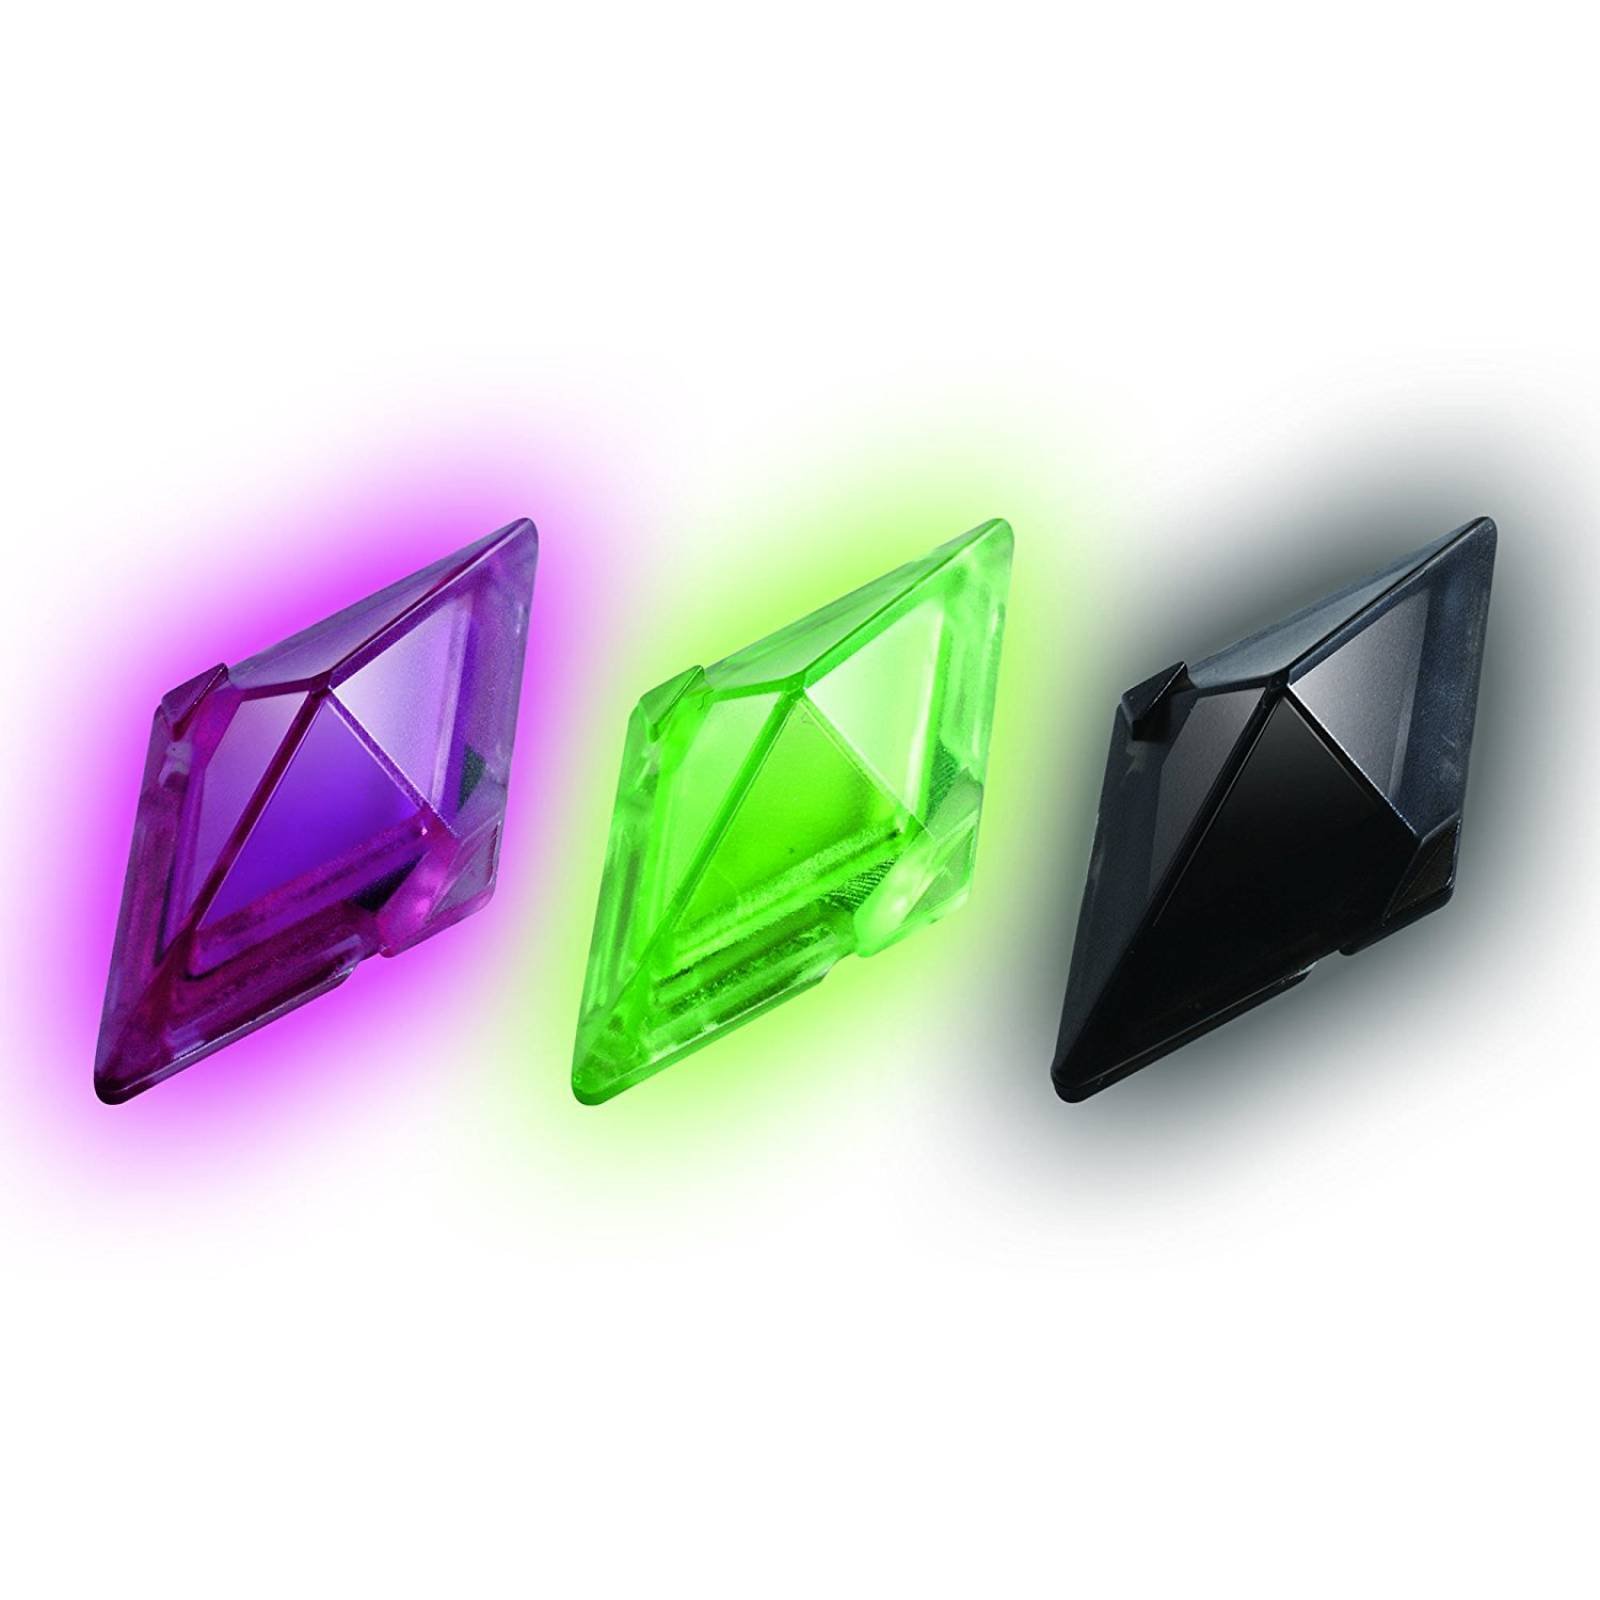 B:PokMon Z-cristal 9 Pack